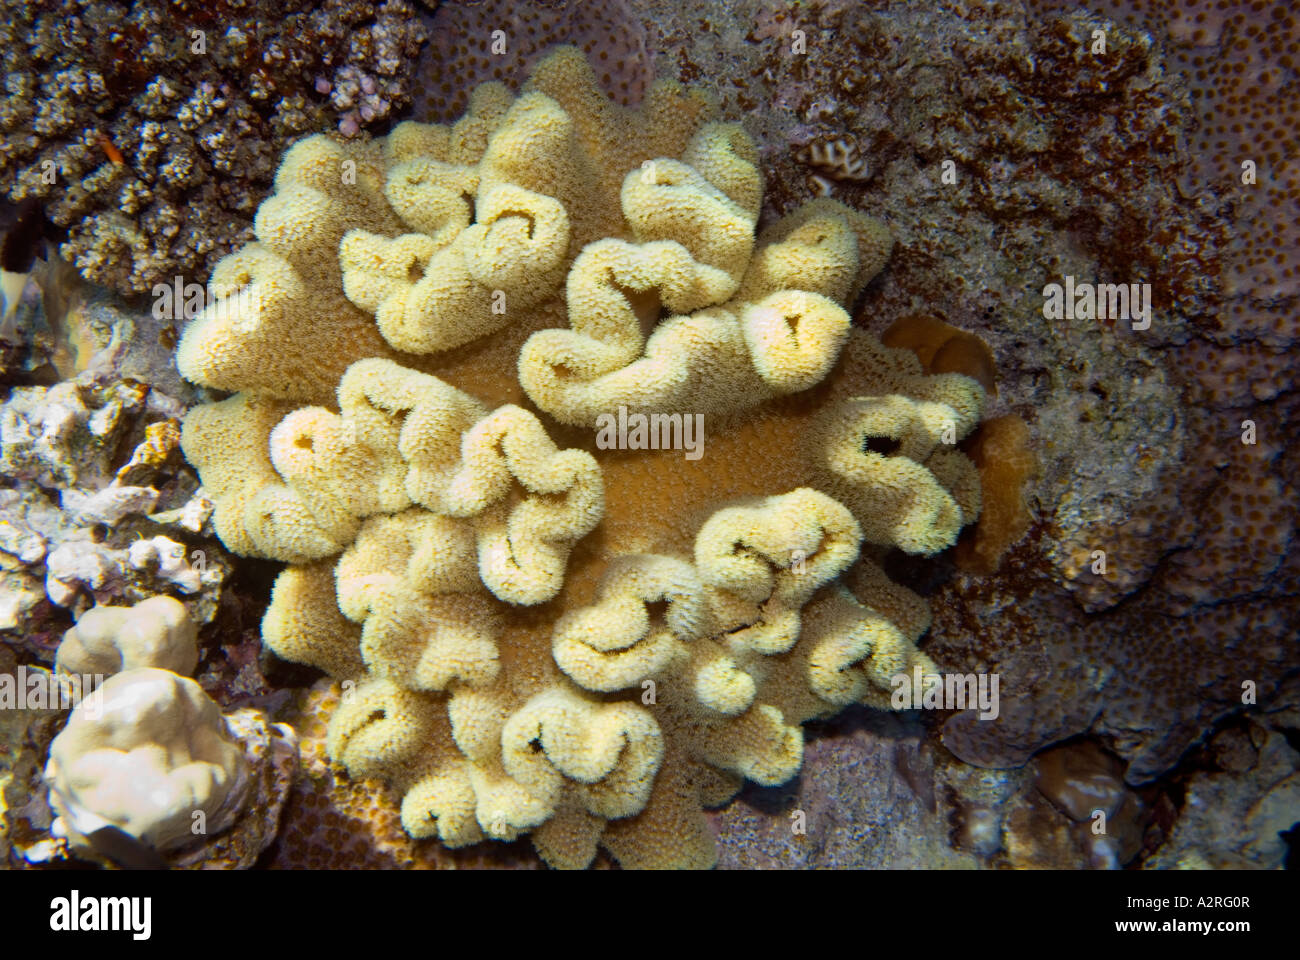 ROSE CORAL Lobophyllia corymbosa reef riff at Sharm El Sheikh EGYPT HADABA housereef Stock Photo